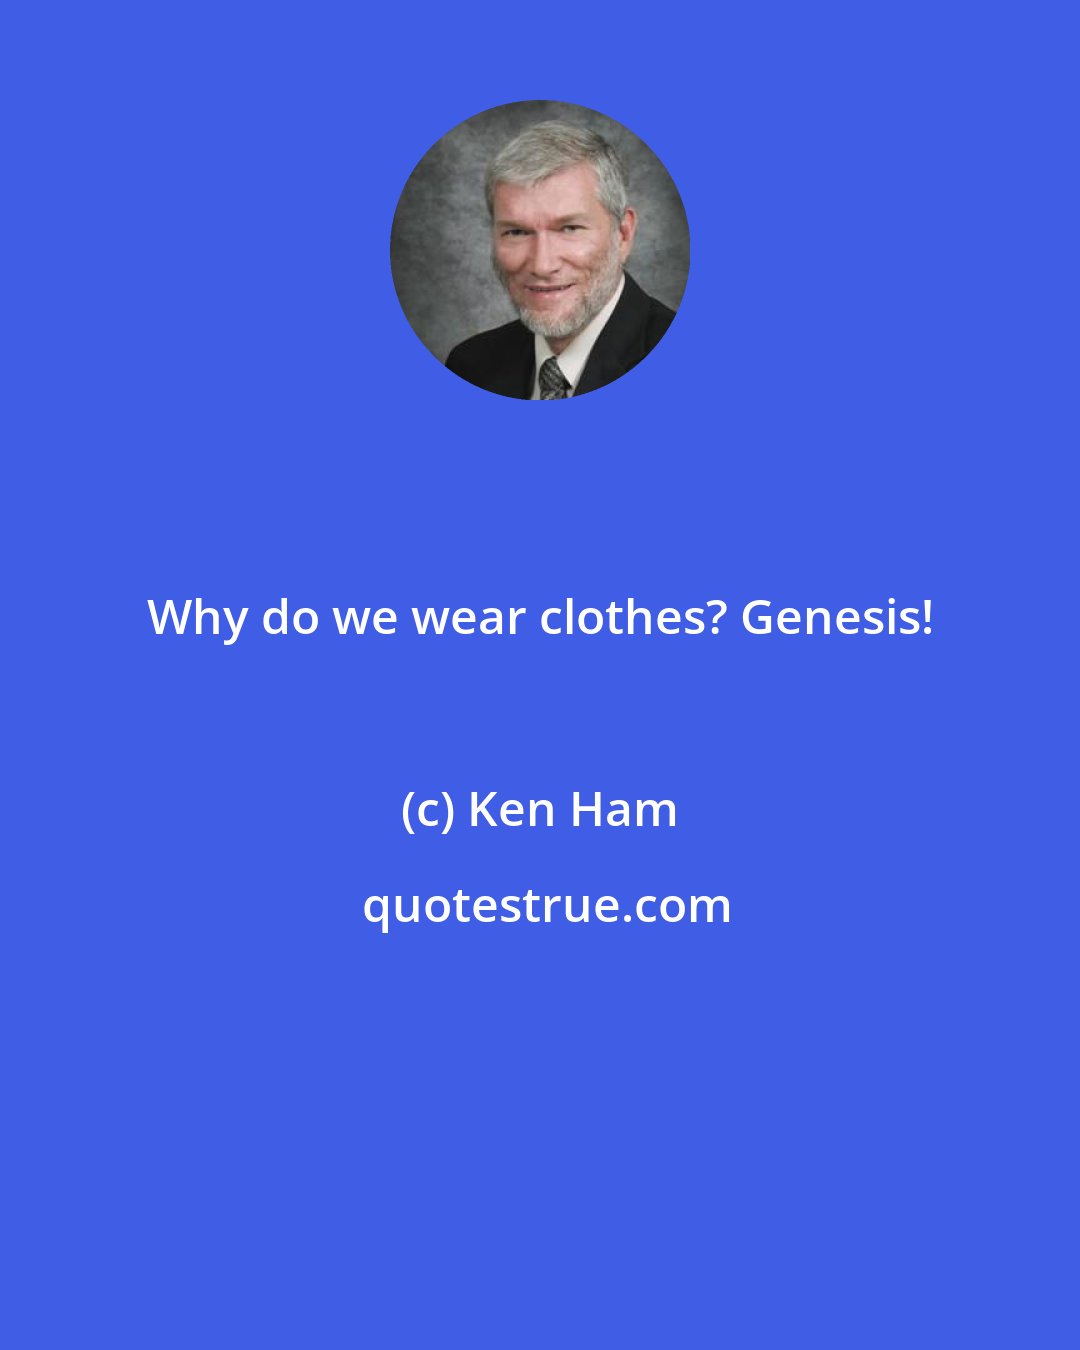 Ken Ham: Why do we wear clothes? Genesis!